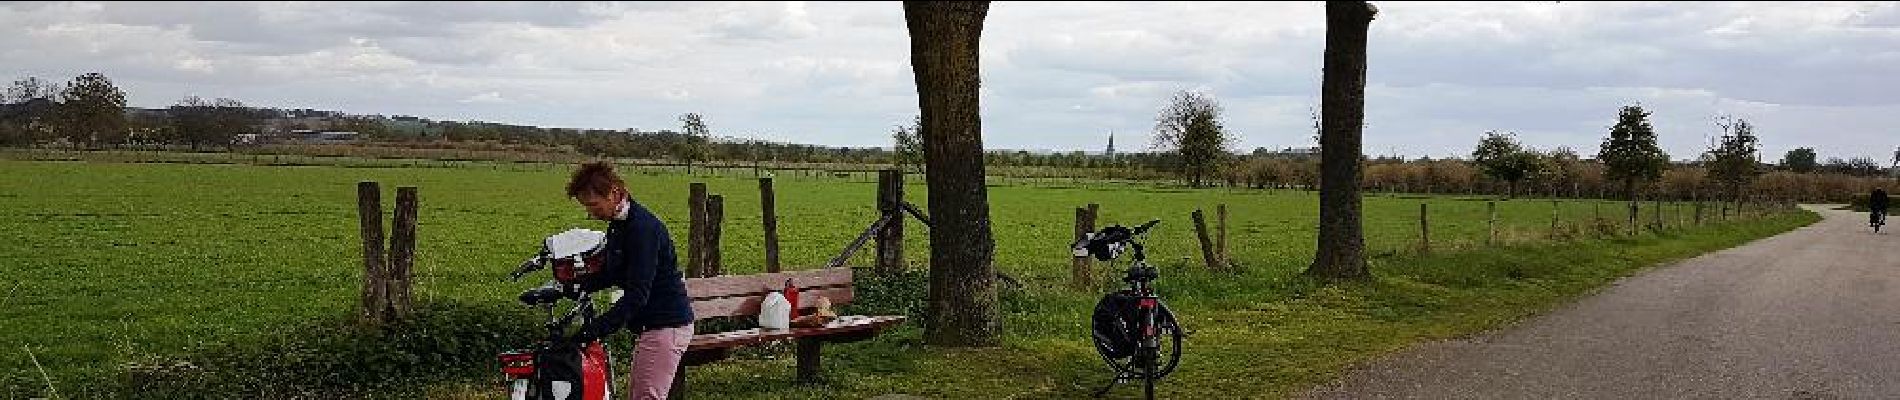 Point d'intérêt Eijsden-Margraten - picknick - Photo